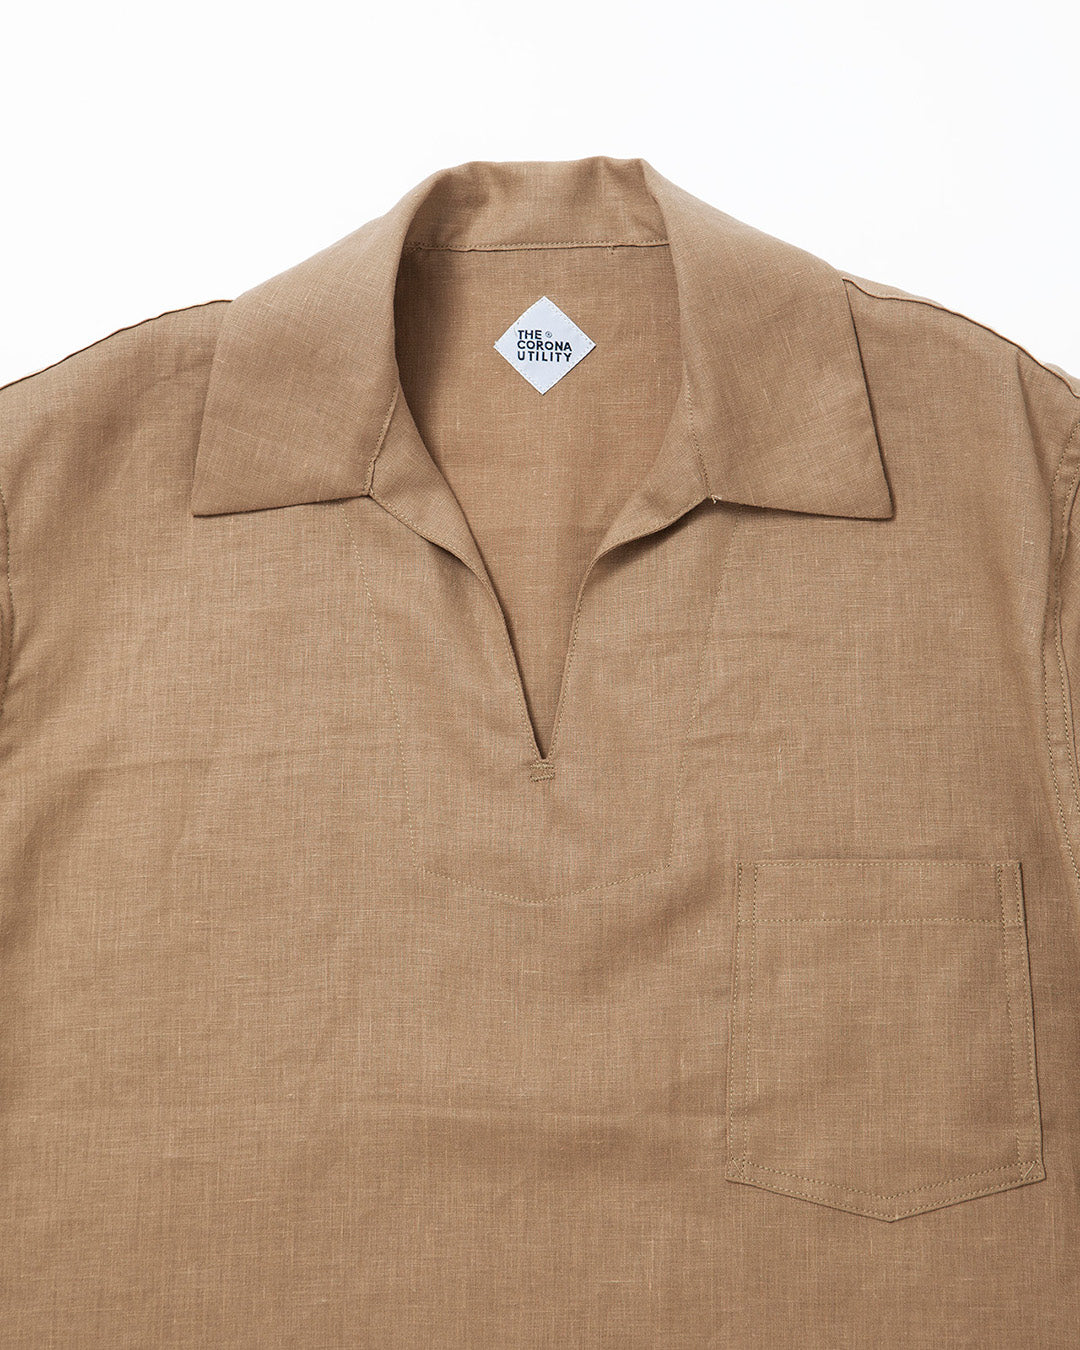 THE CORONA UTILITY - CS010・Utility Sailor Short Sleeve Jacket / Khaki